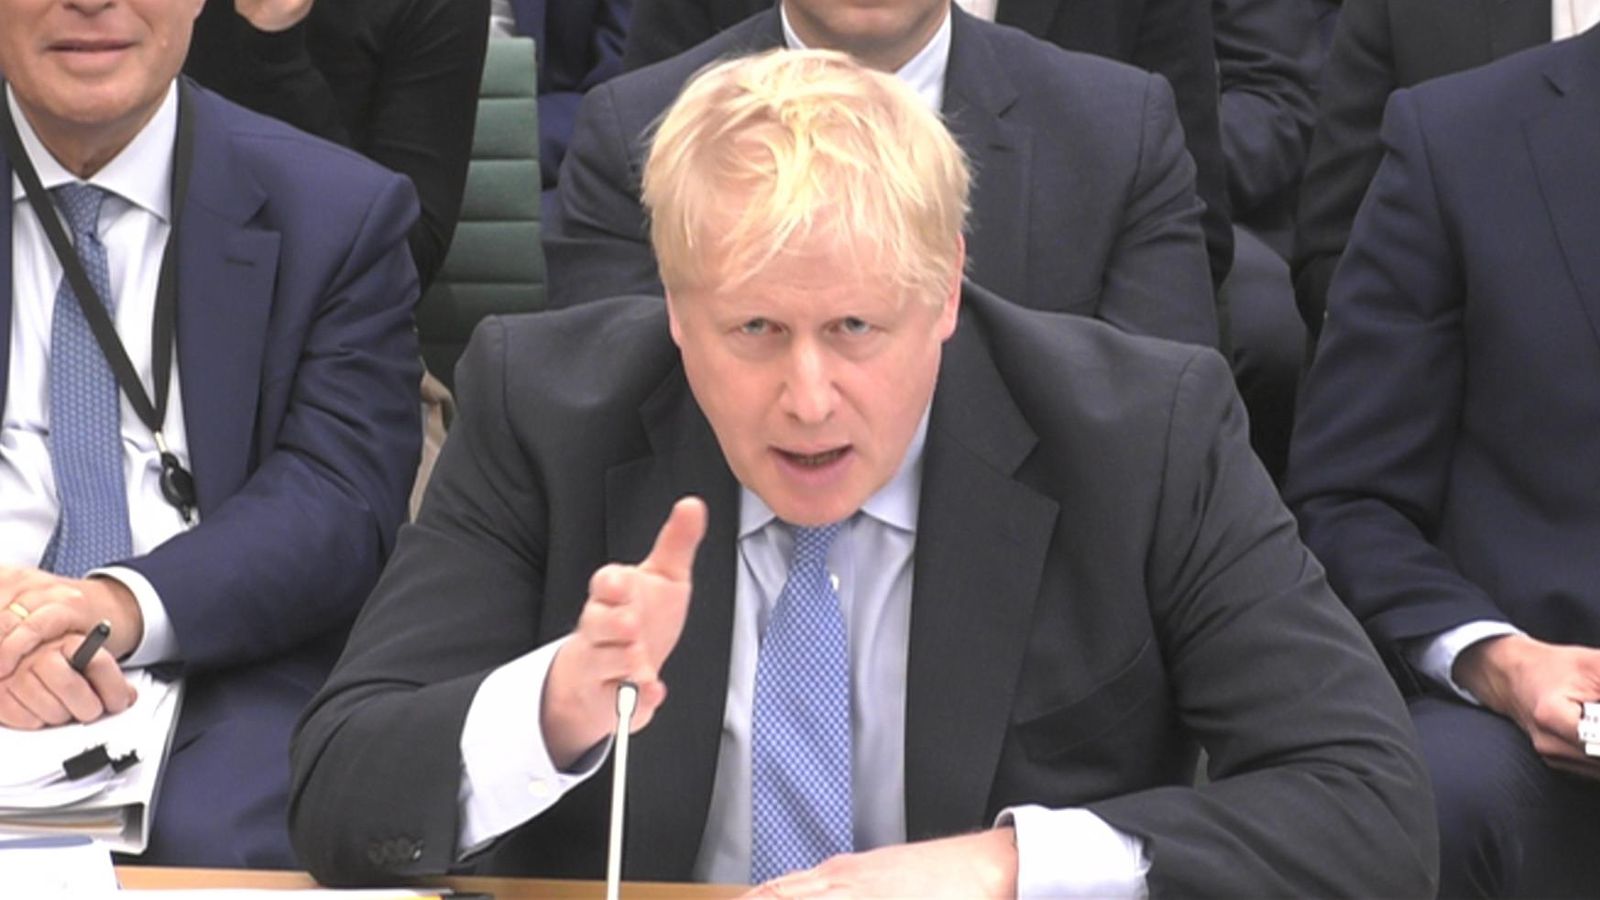 Legal battle looms over Boris Johnson’s COVID pandemic WhatsApp messages | Politics News